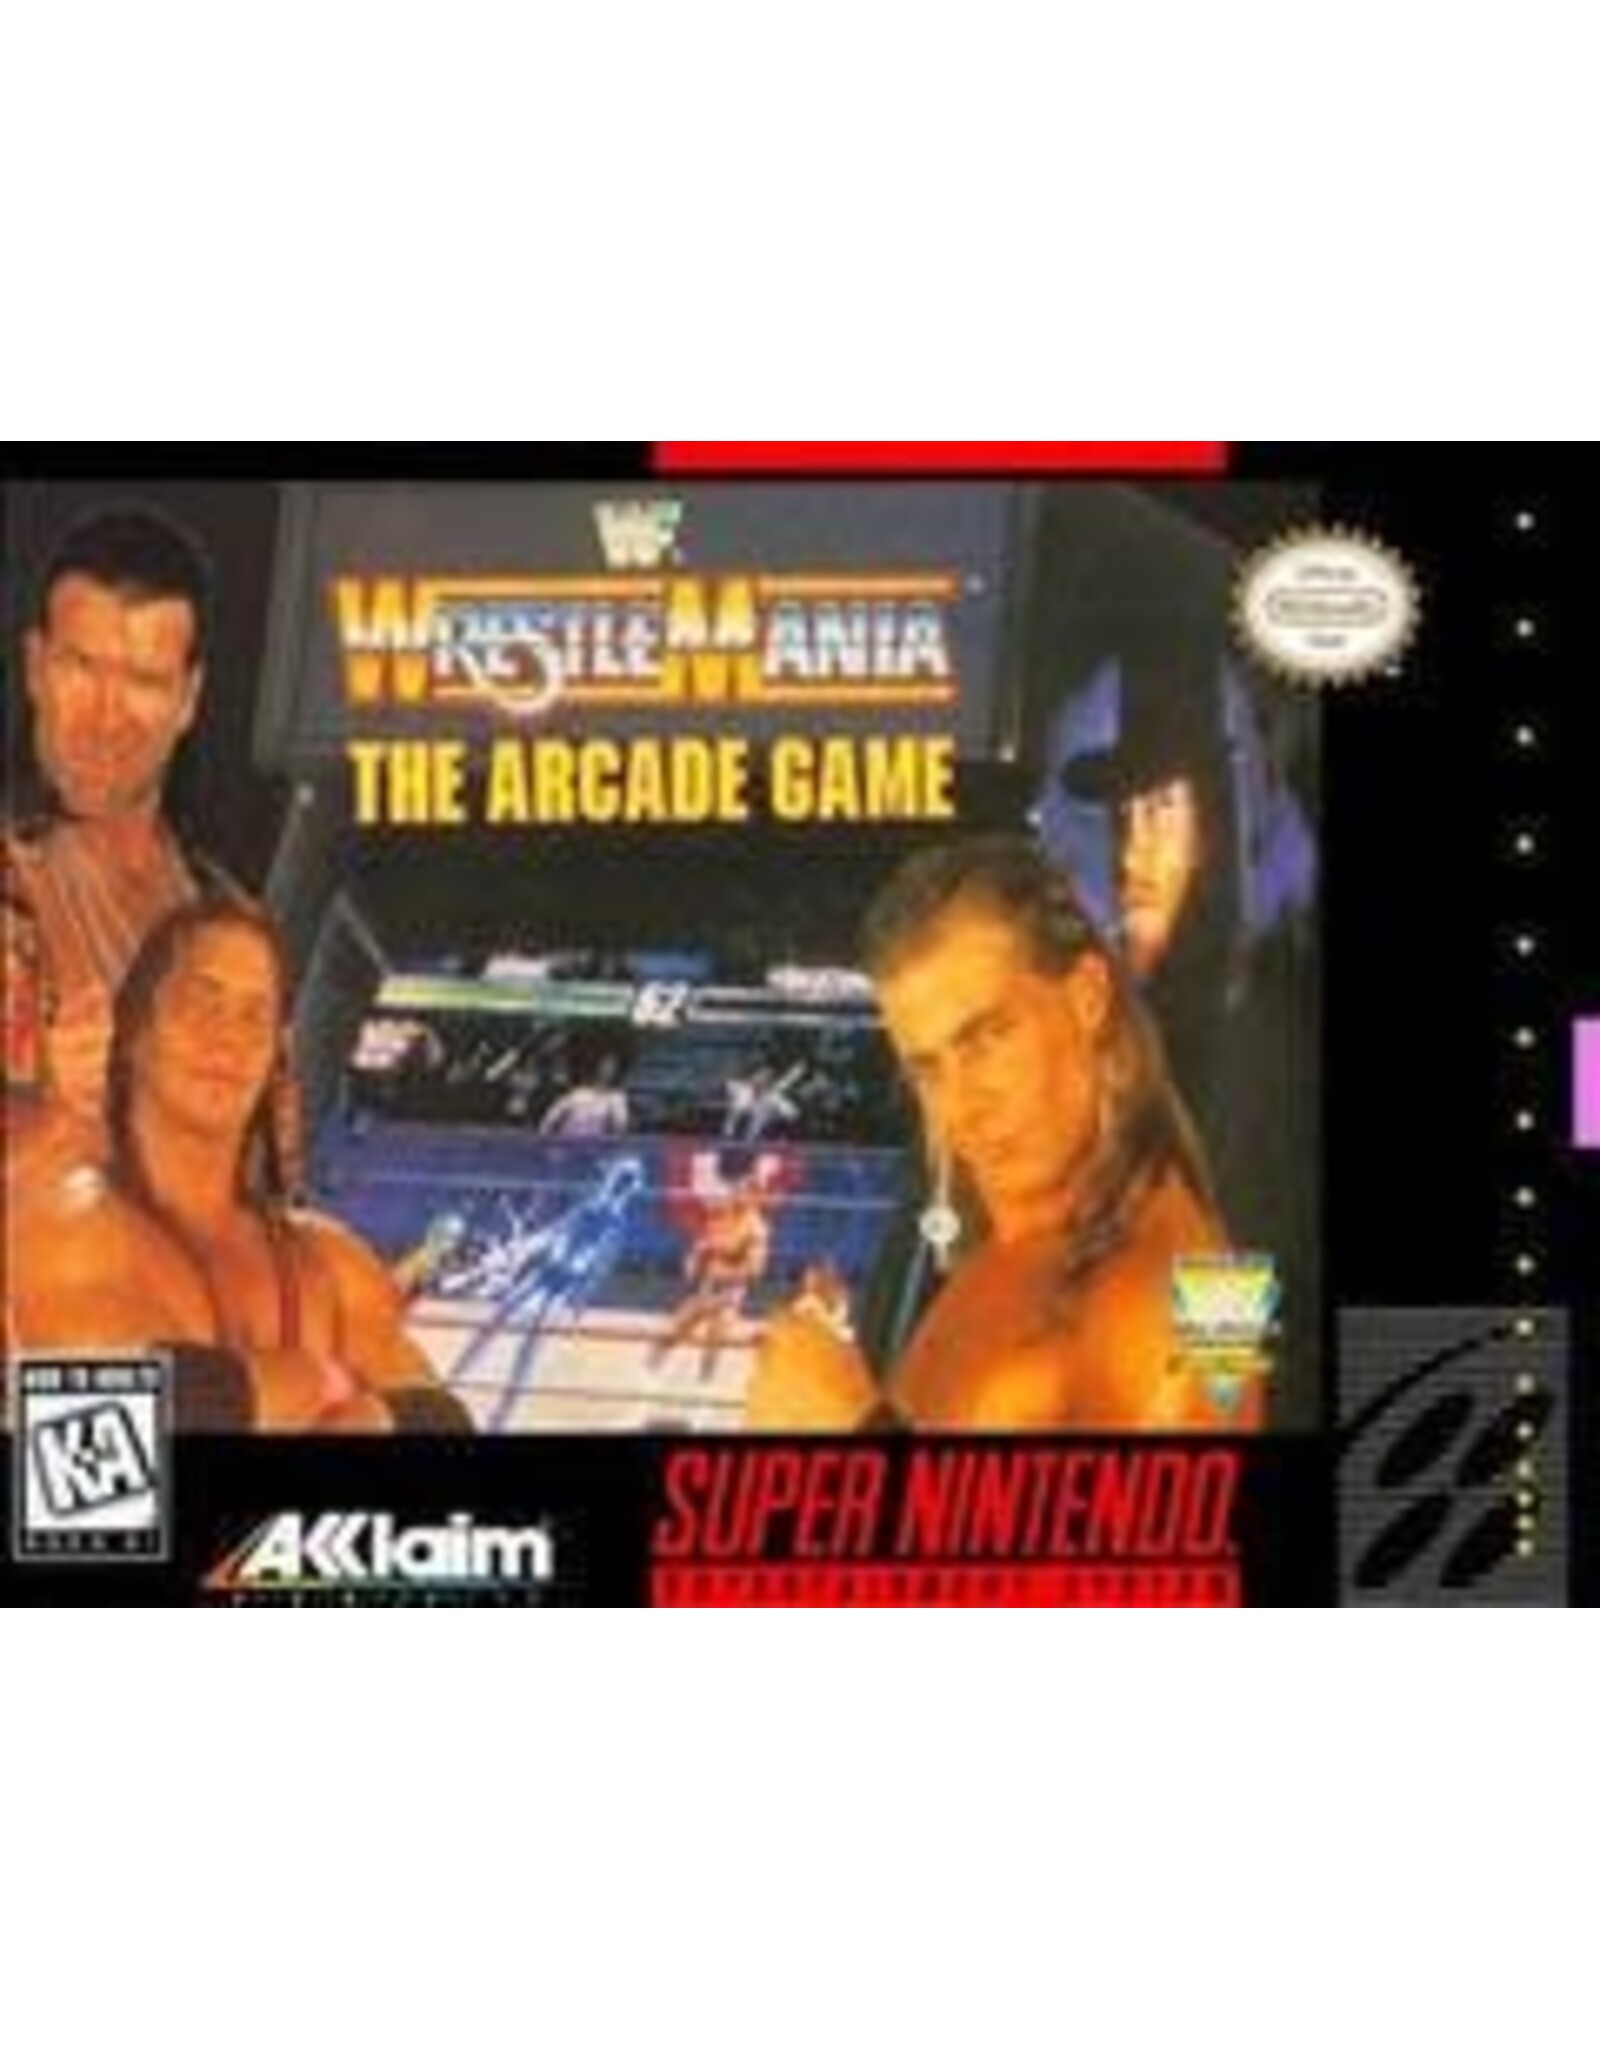 Super Nintendo WWF Wrestlemania Arcade Game (Used, Cart Only, Cosmetic Damage)